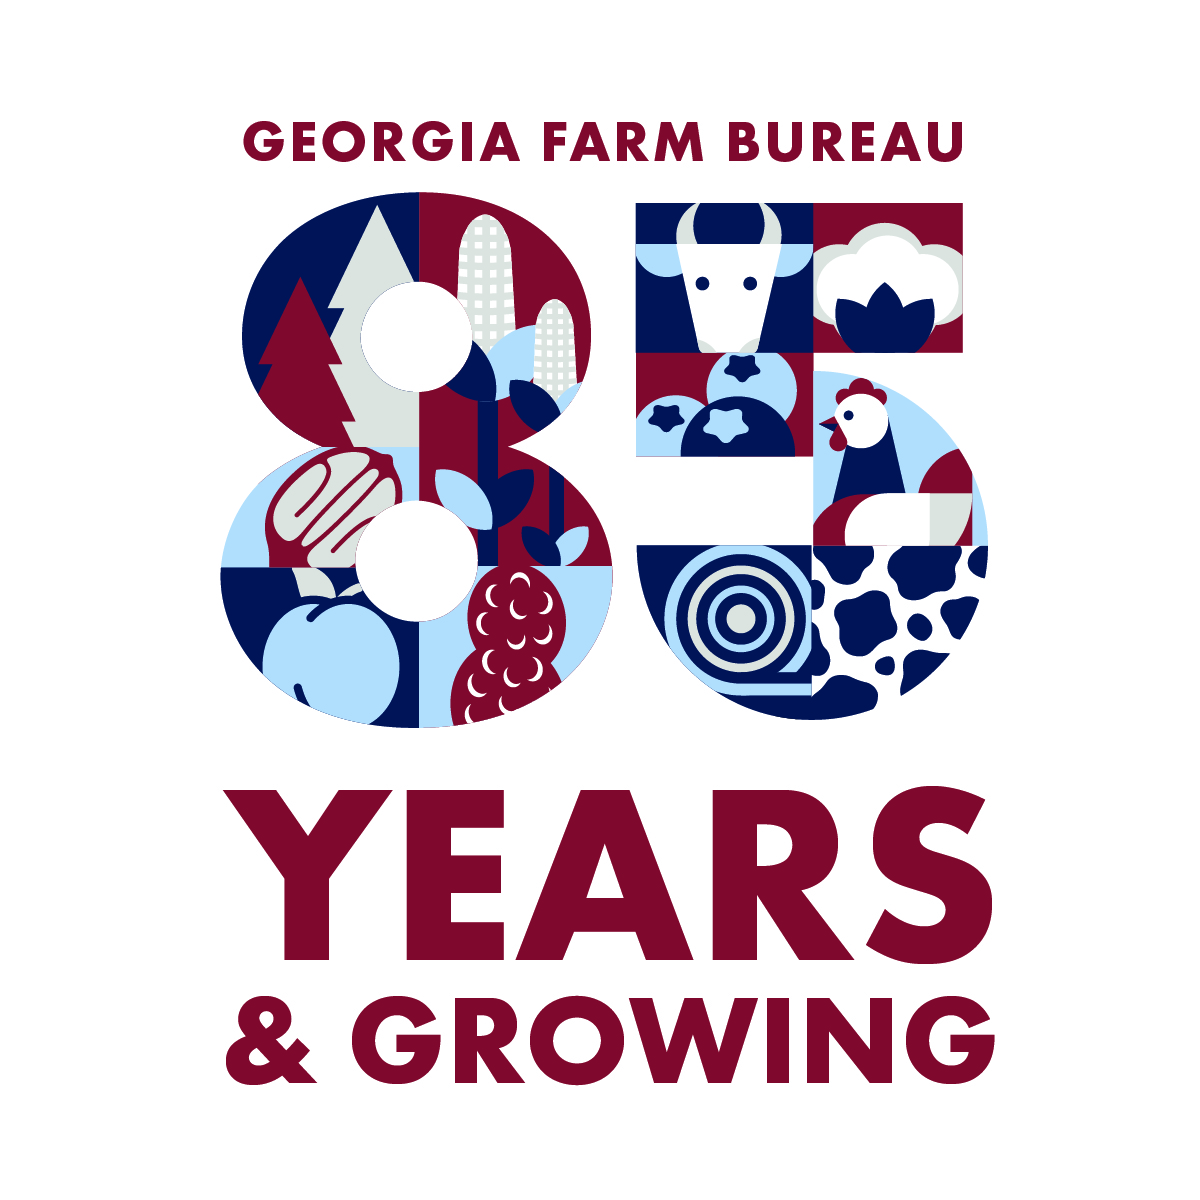 Georgia Farm Bureau marks 85 years of representing farmers